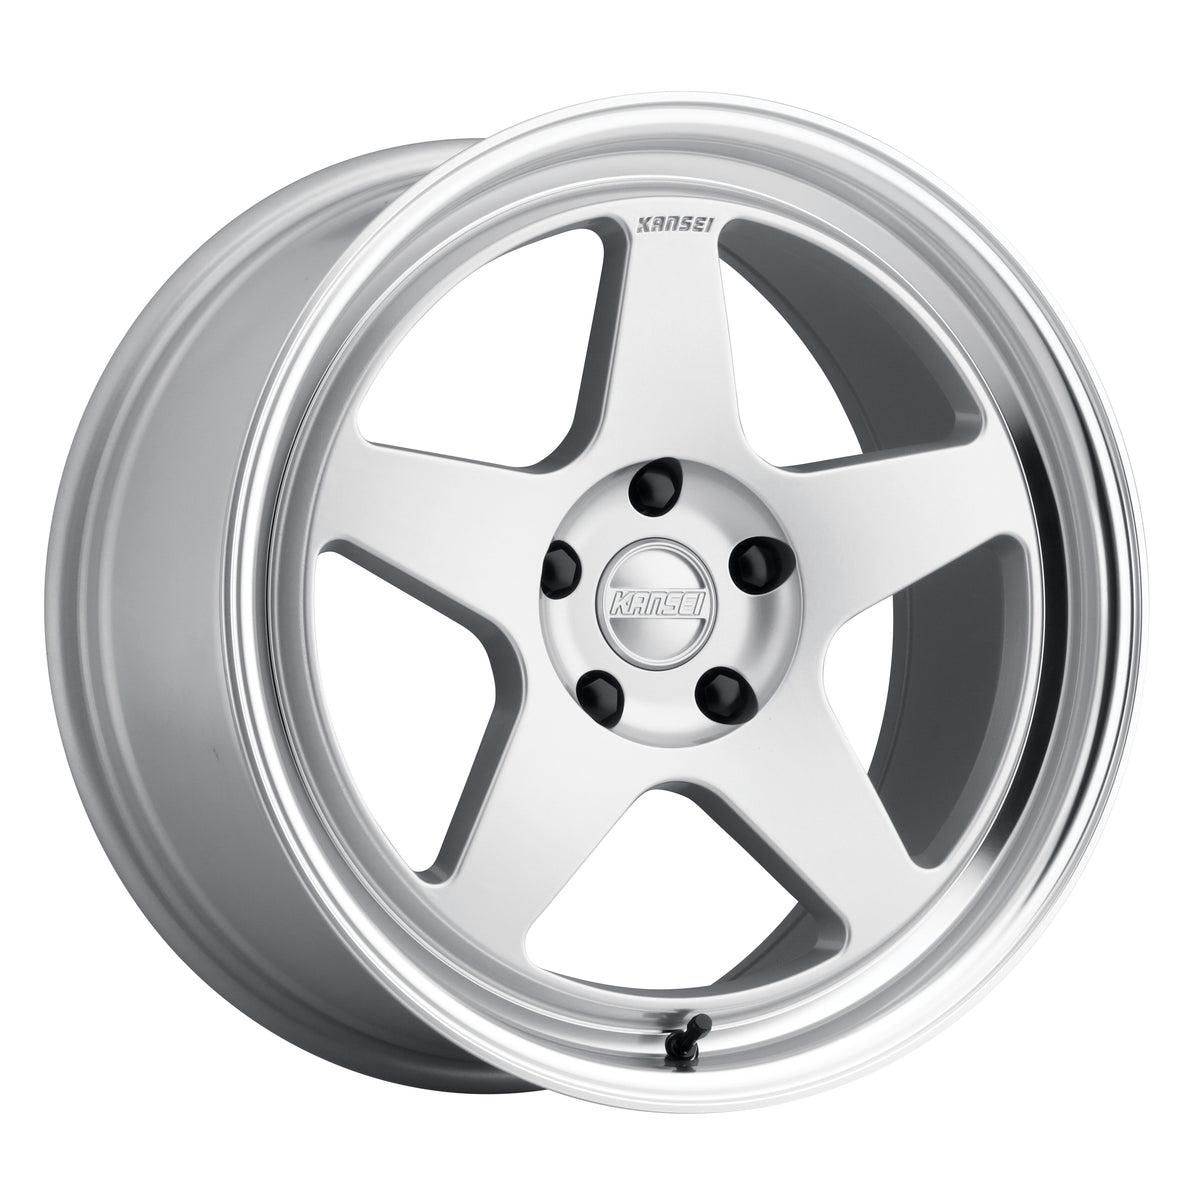 K12H KNP Wheel, Size: 18" x 9.50", Bolt Pattern: 5 x 120 mm, Backspace: 6.12" [Finish: Hyper Silver]